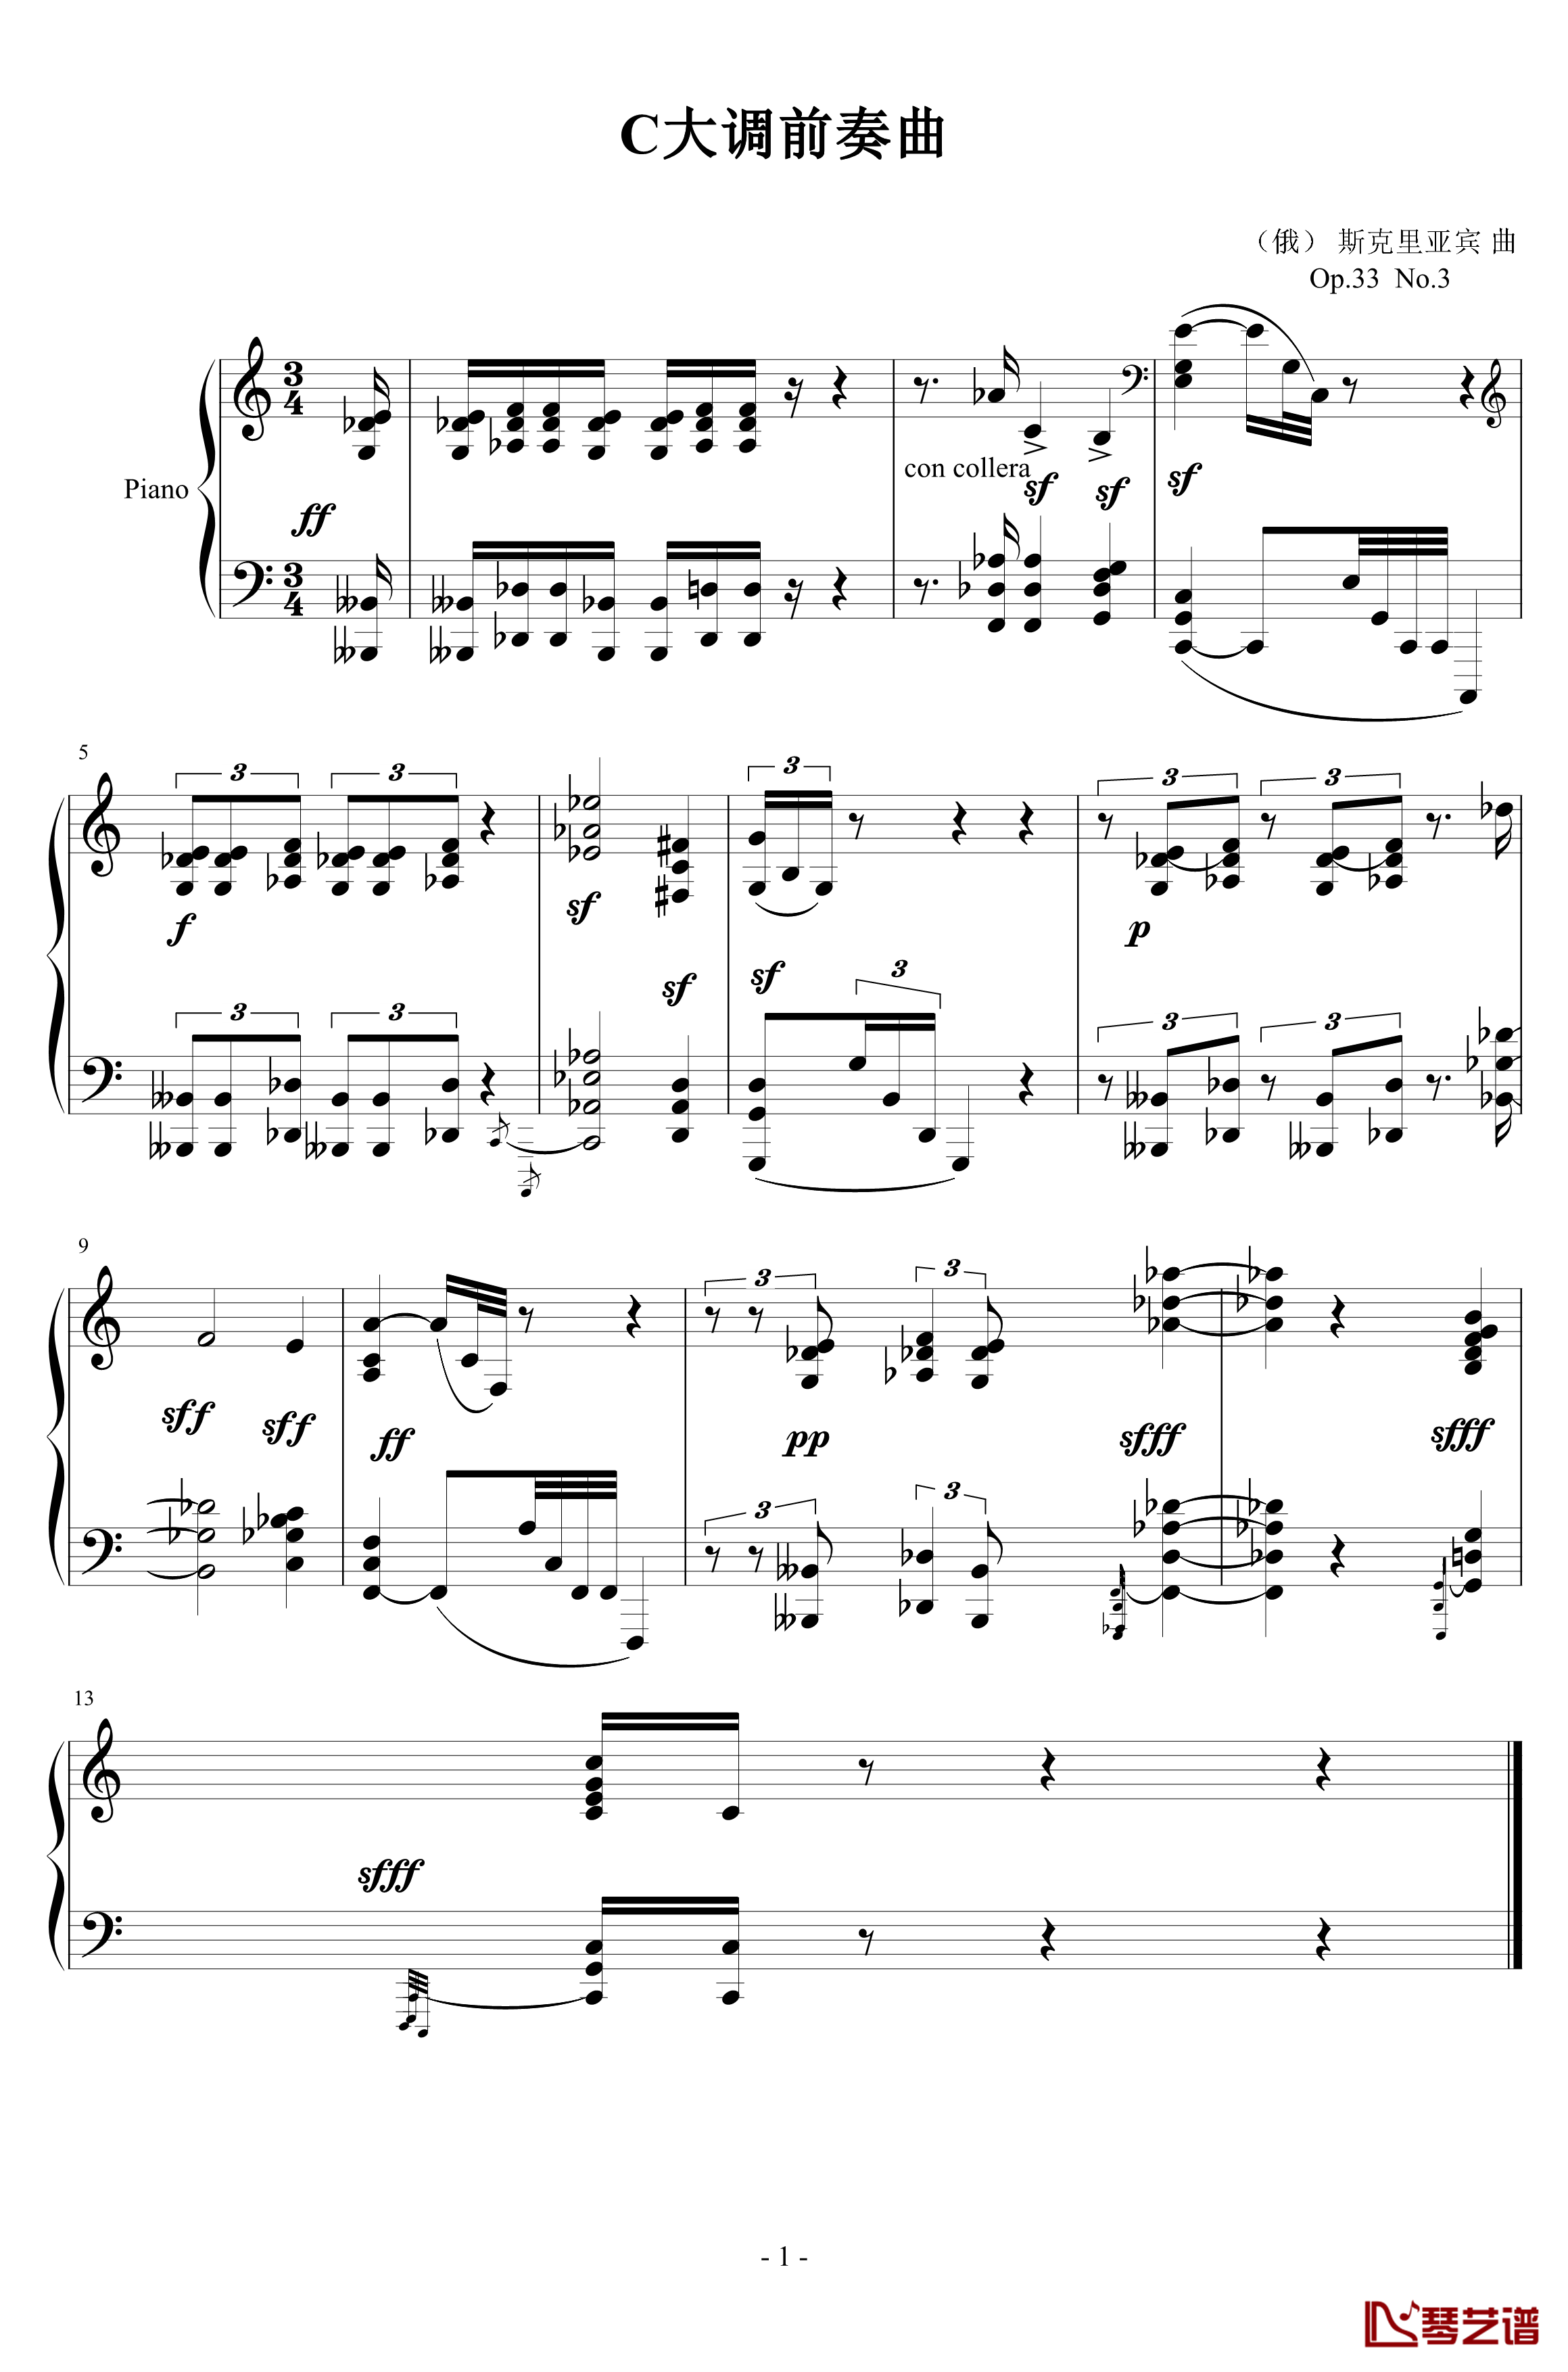 C大调前奏曲钢琴谱-斯克里亚宾-Op.33  No.3